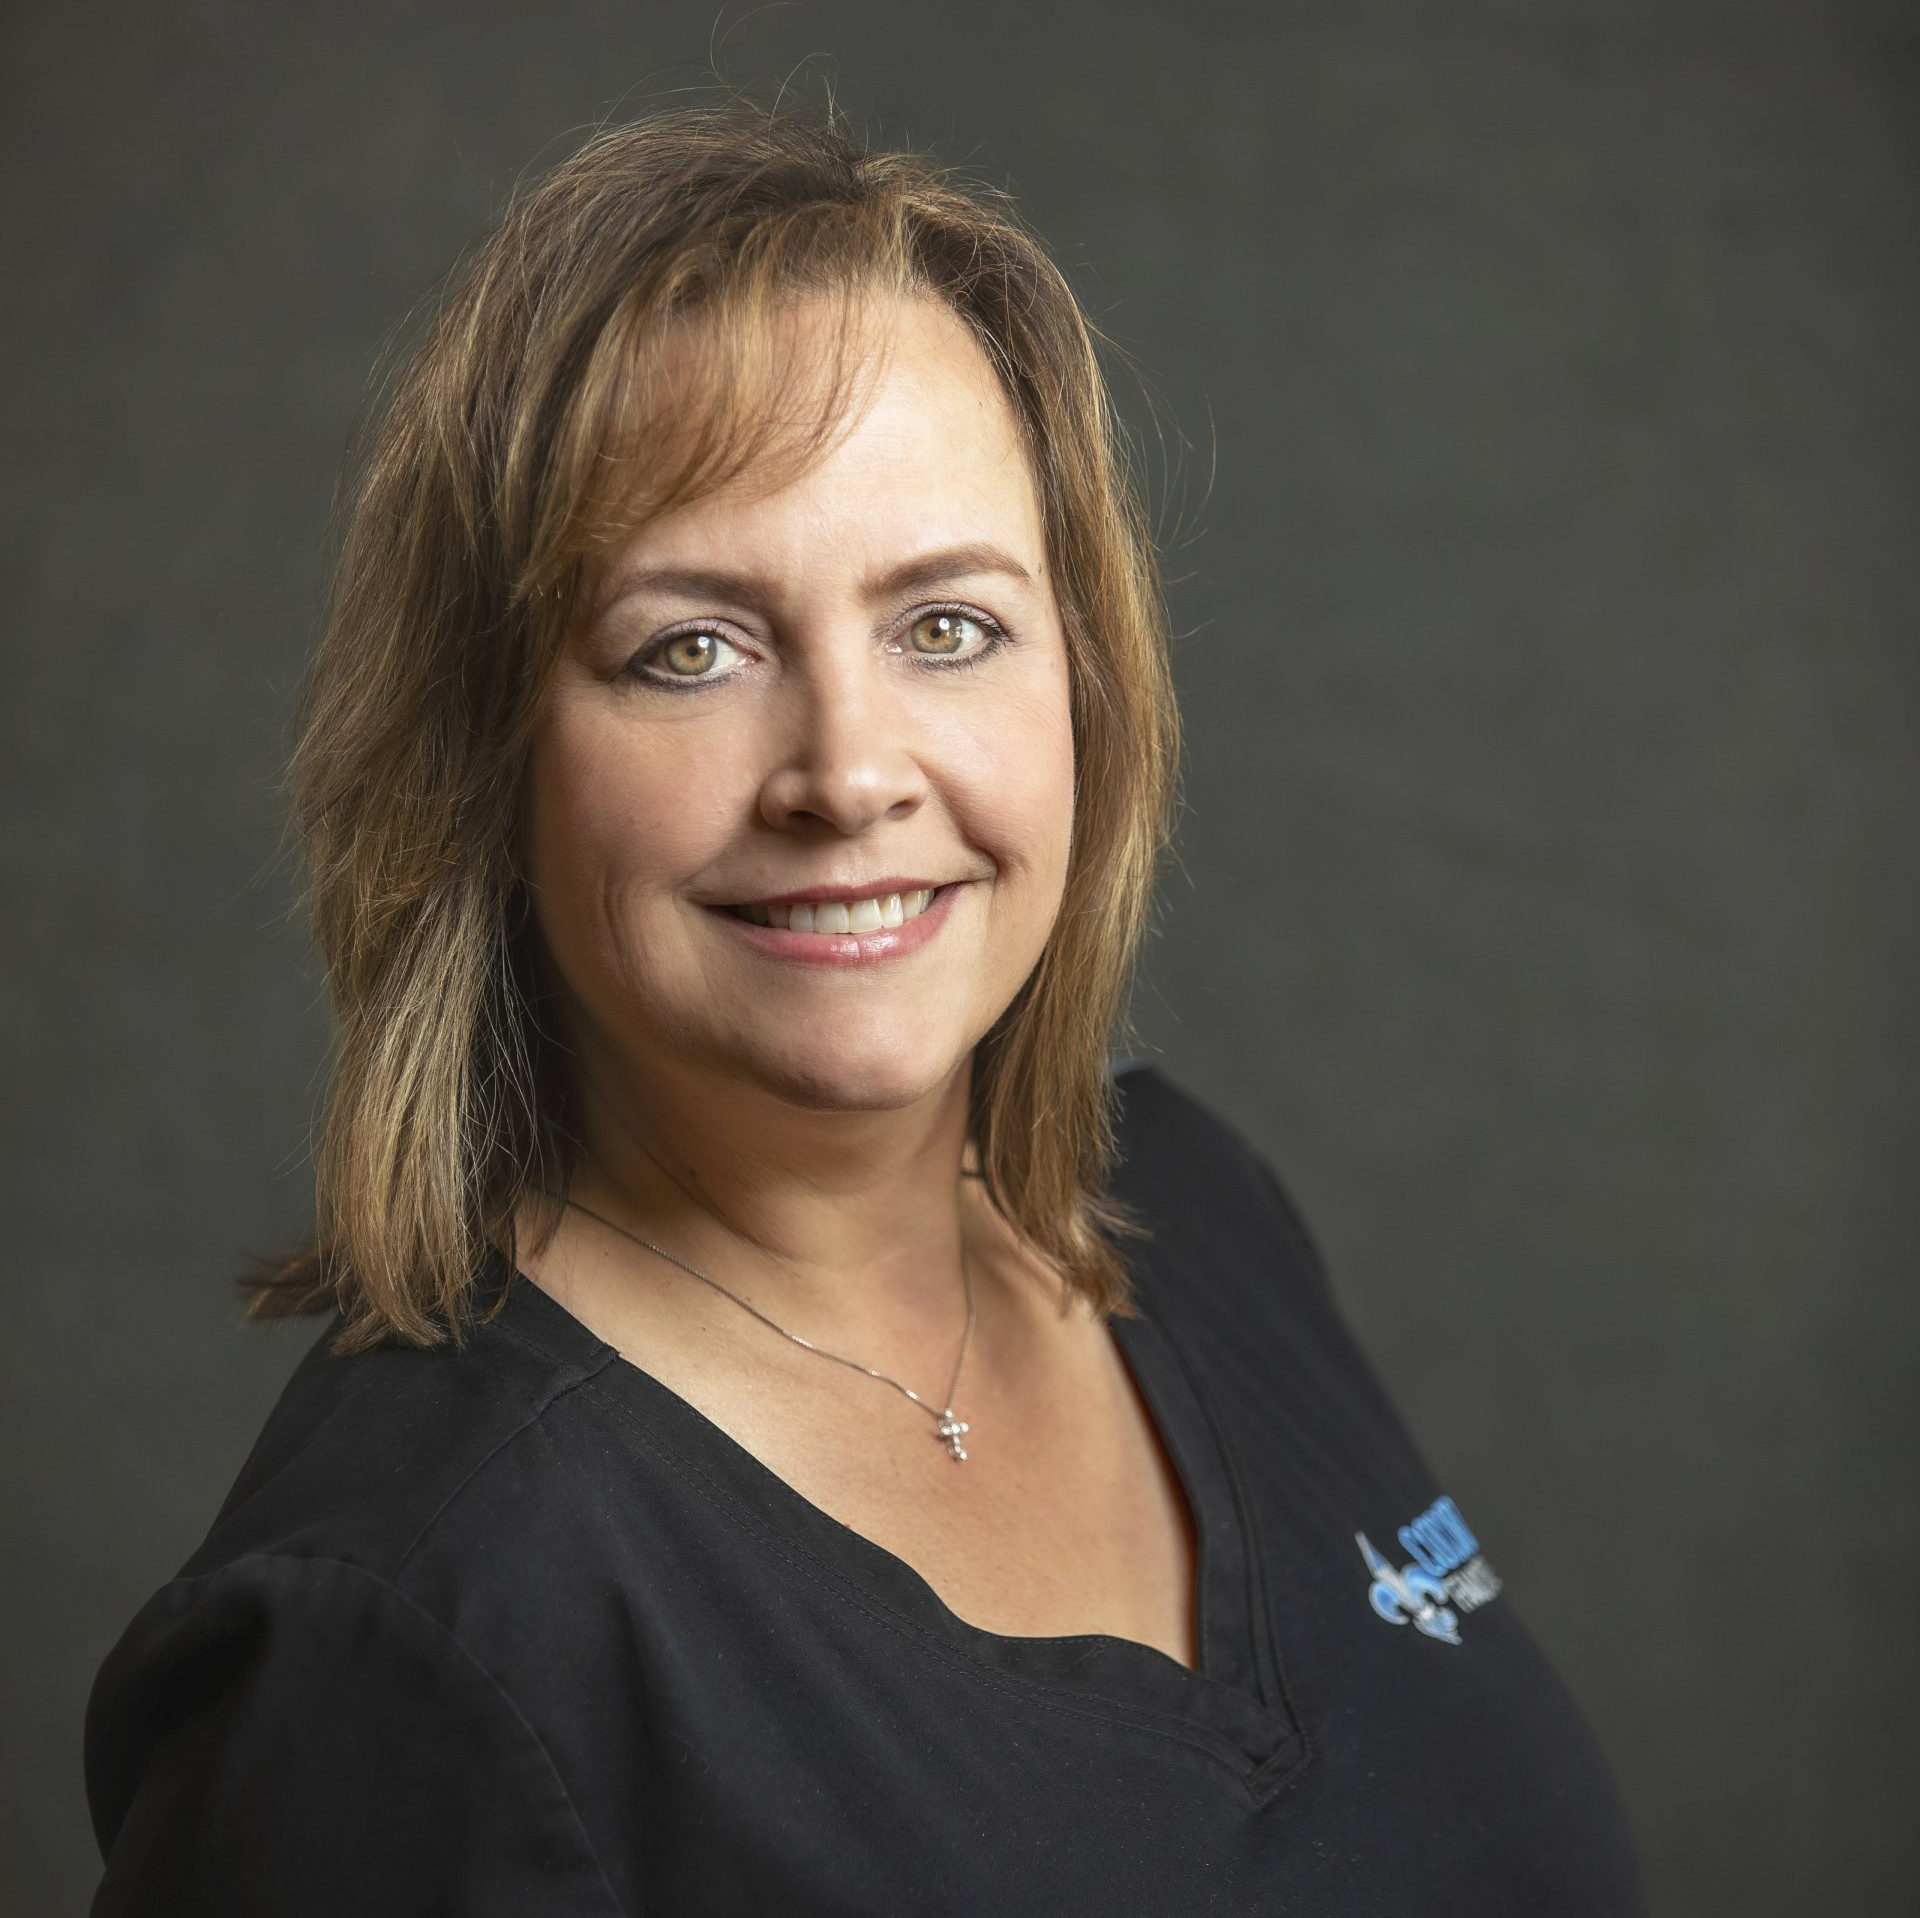 Melissa - Concord Family Dental | Emergency dentist, Extractions, Implants in Hammond LA